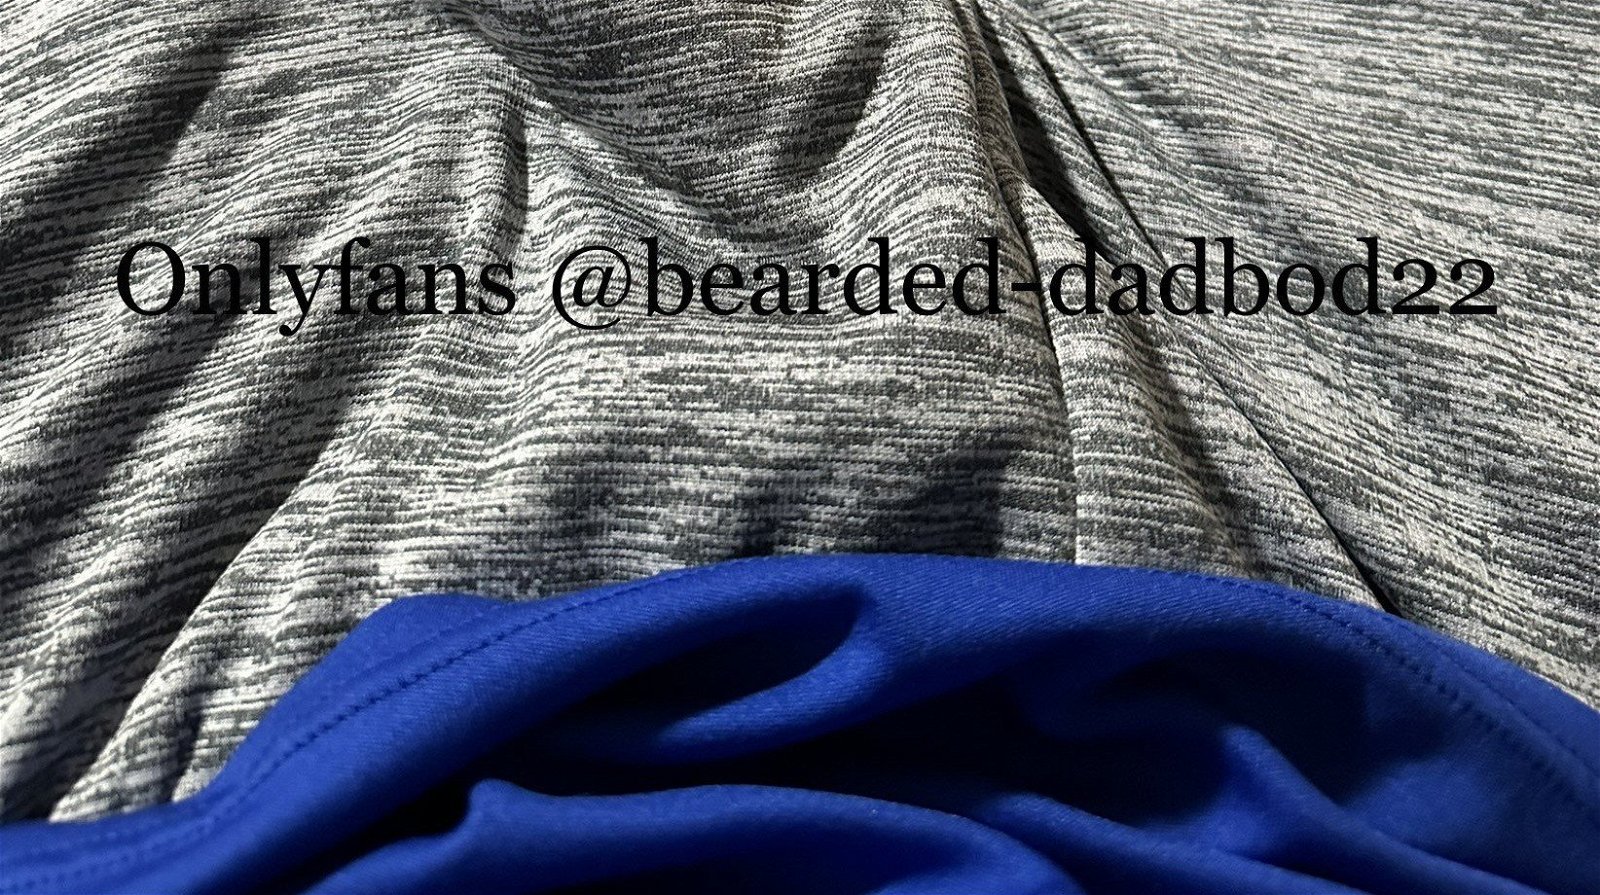 Cover photo of Bearded-dadbod